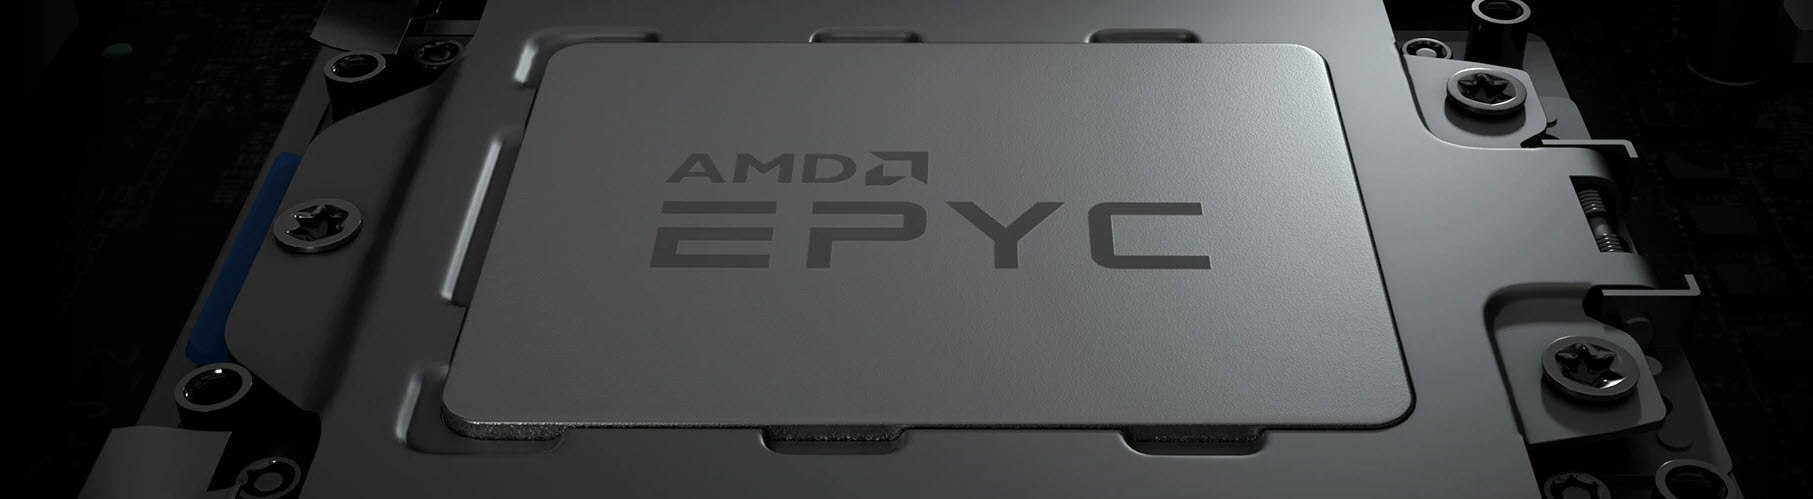 2020 04 16 10 37 49 AMD แนะนำโปรเซสเซอร์ใหม่ AMD EPYC 7Fx2 นิยามใหม่ของประสิทธิภาพการประมวลผลสำหรับระบบฐานข้อมูล เทคโนโลยี HPC เชิงพาณิชย์ และโครงสร้างพื้นฐานแบบไฮเปอร์คอนเวิร์จ